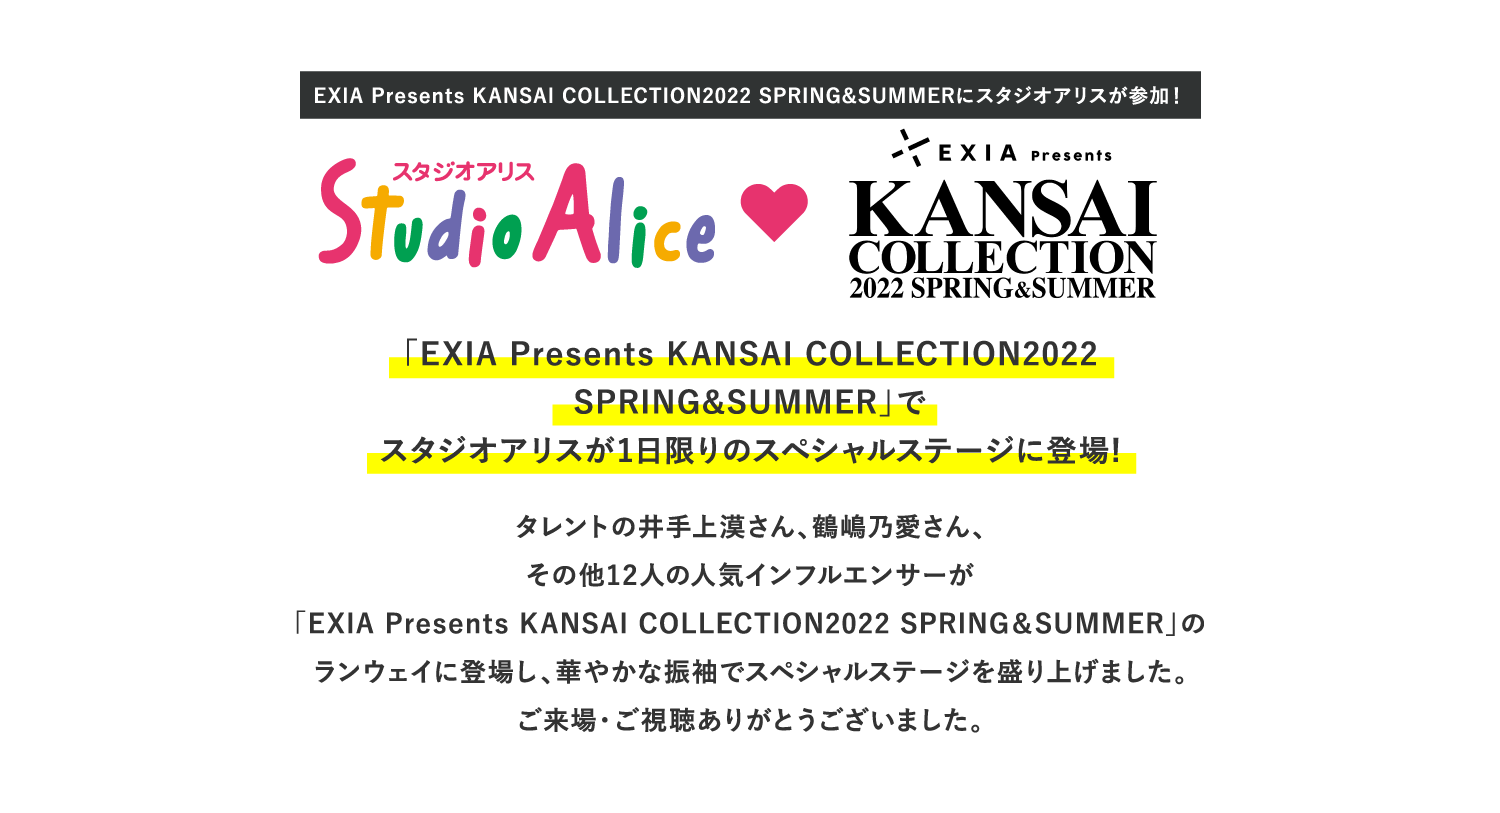 「EXIA Presents KANSAI COLLECTION2022 SPRING＆SUMMER」でスタジオアリスが1日限りのスペシャルステージに登場!